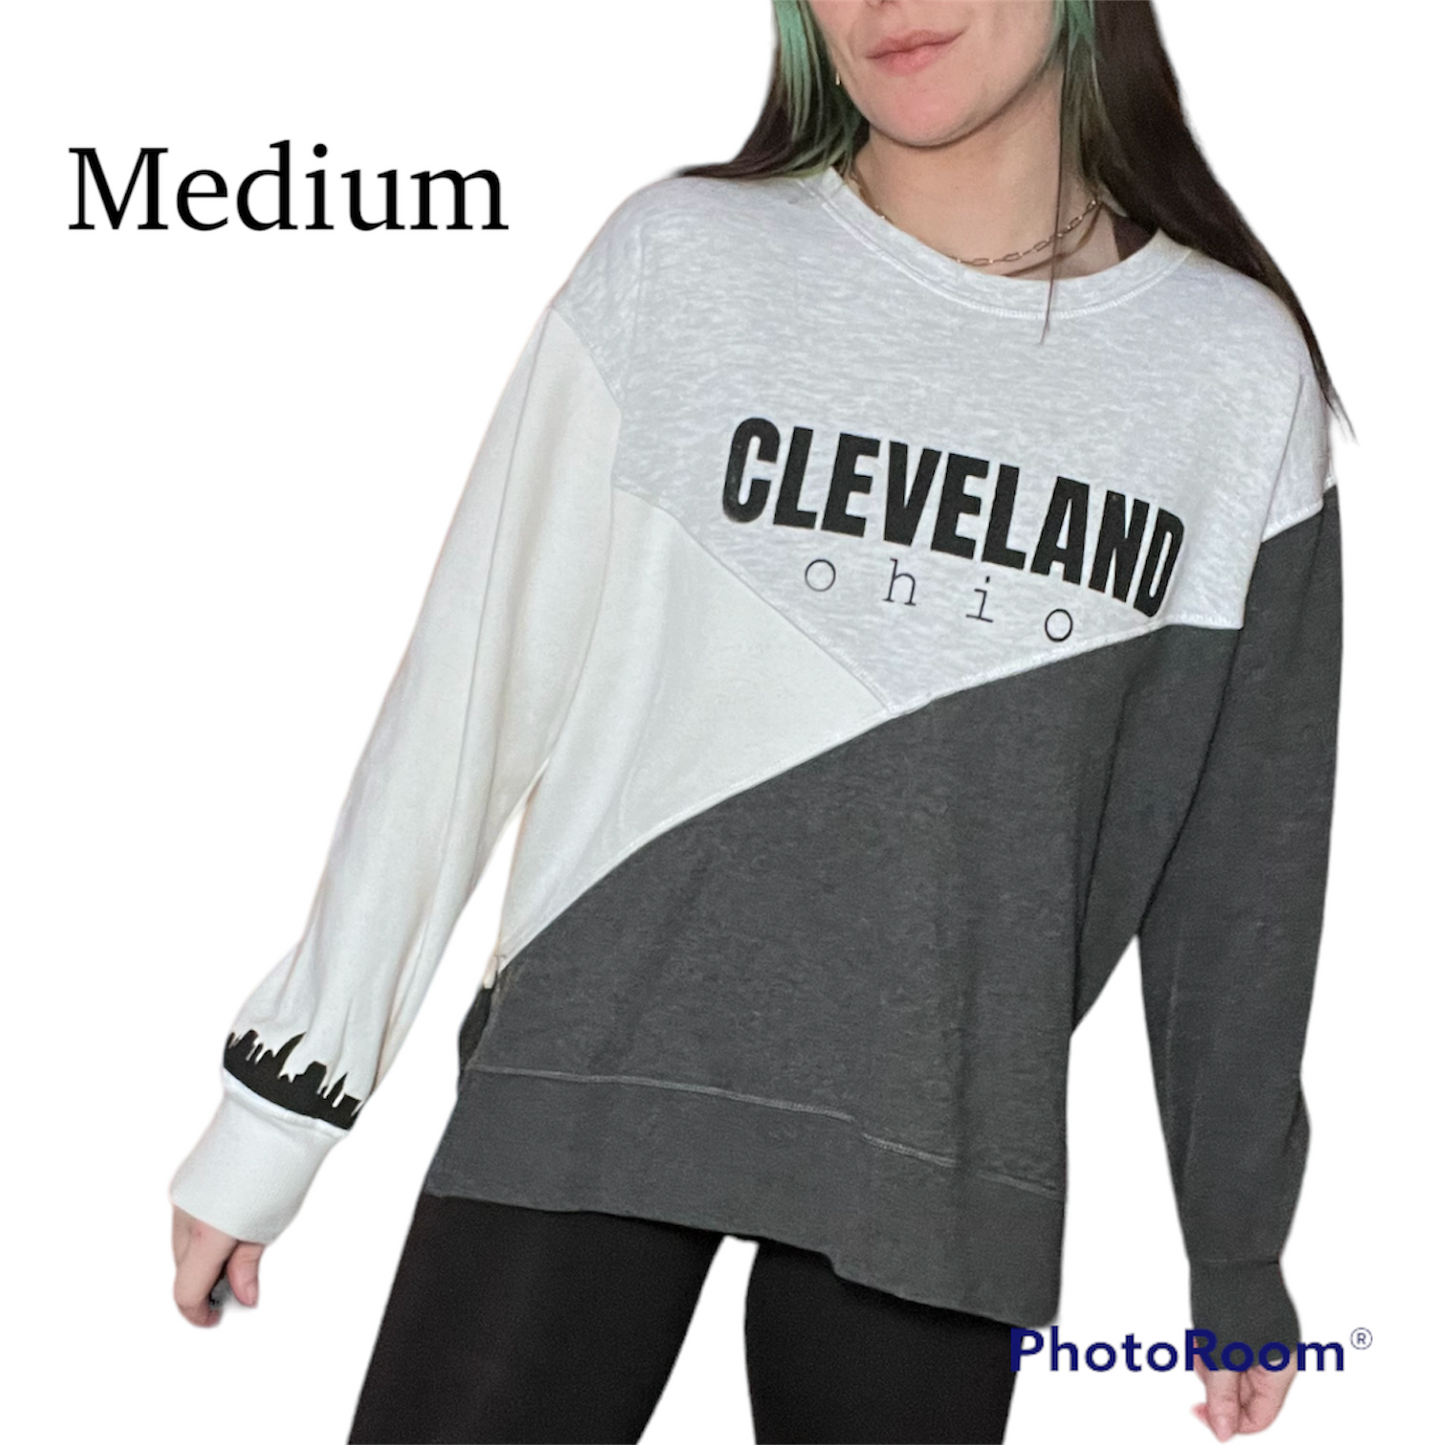 Cleveland Skyline sweater